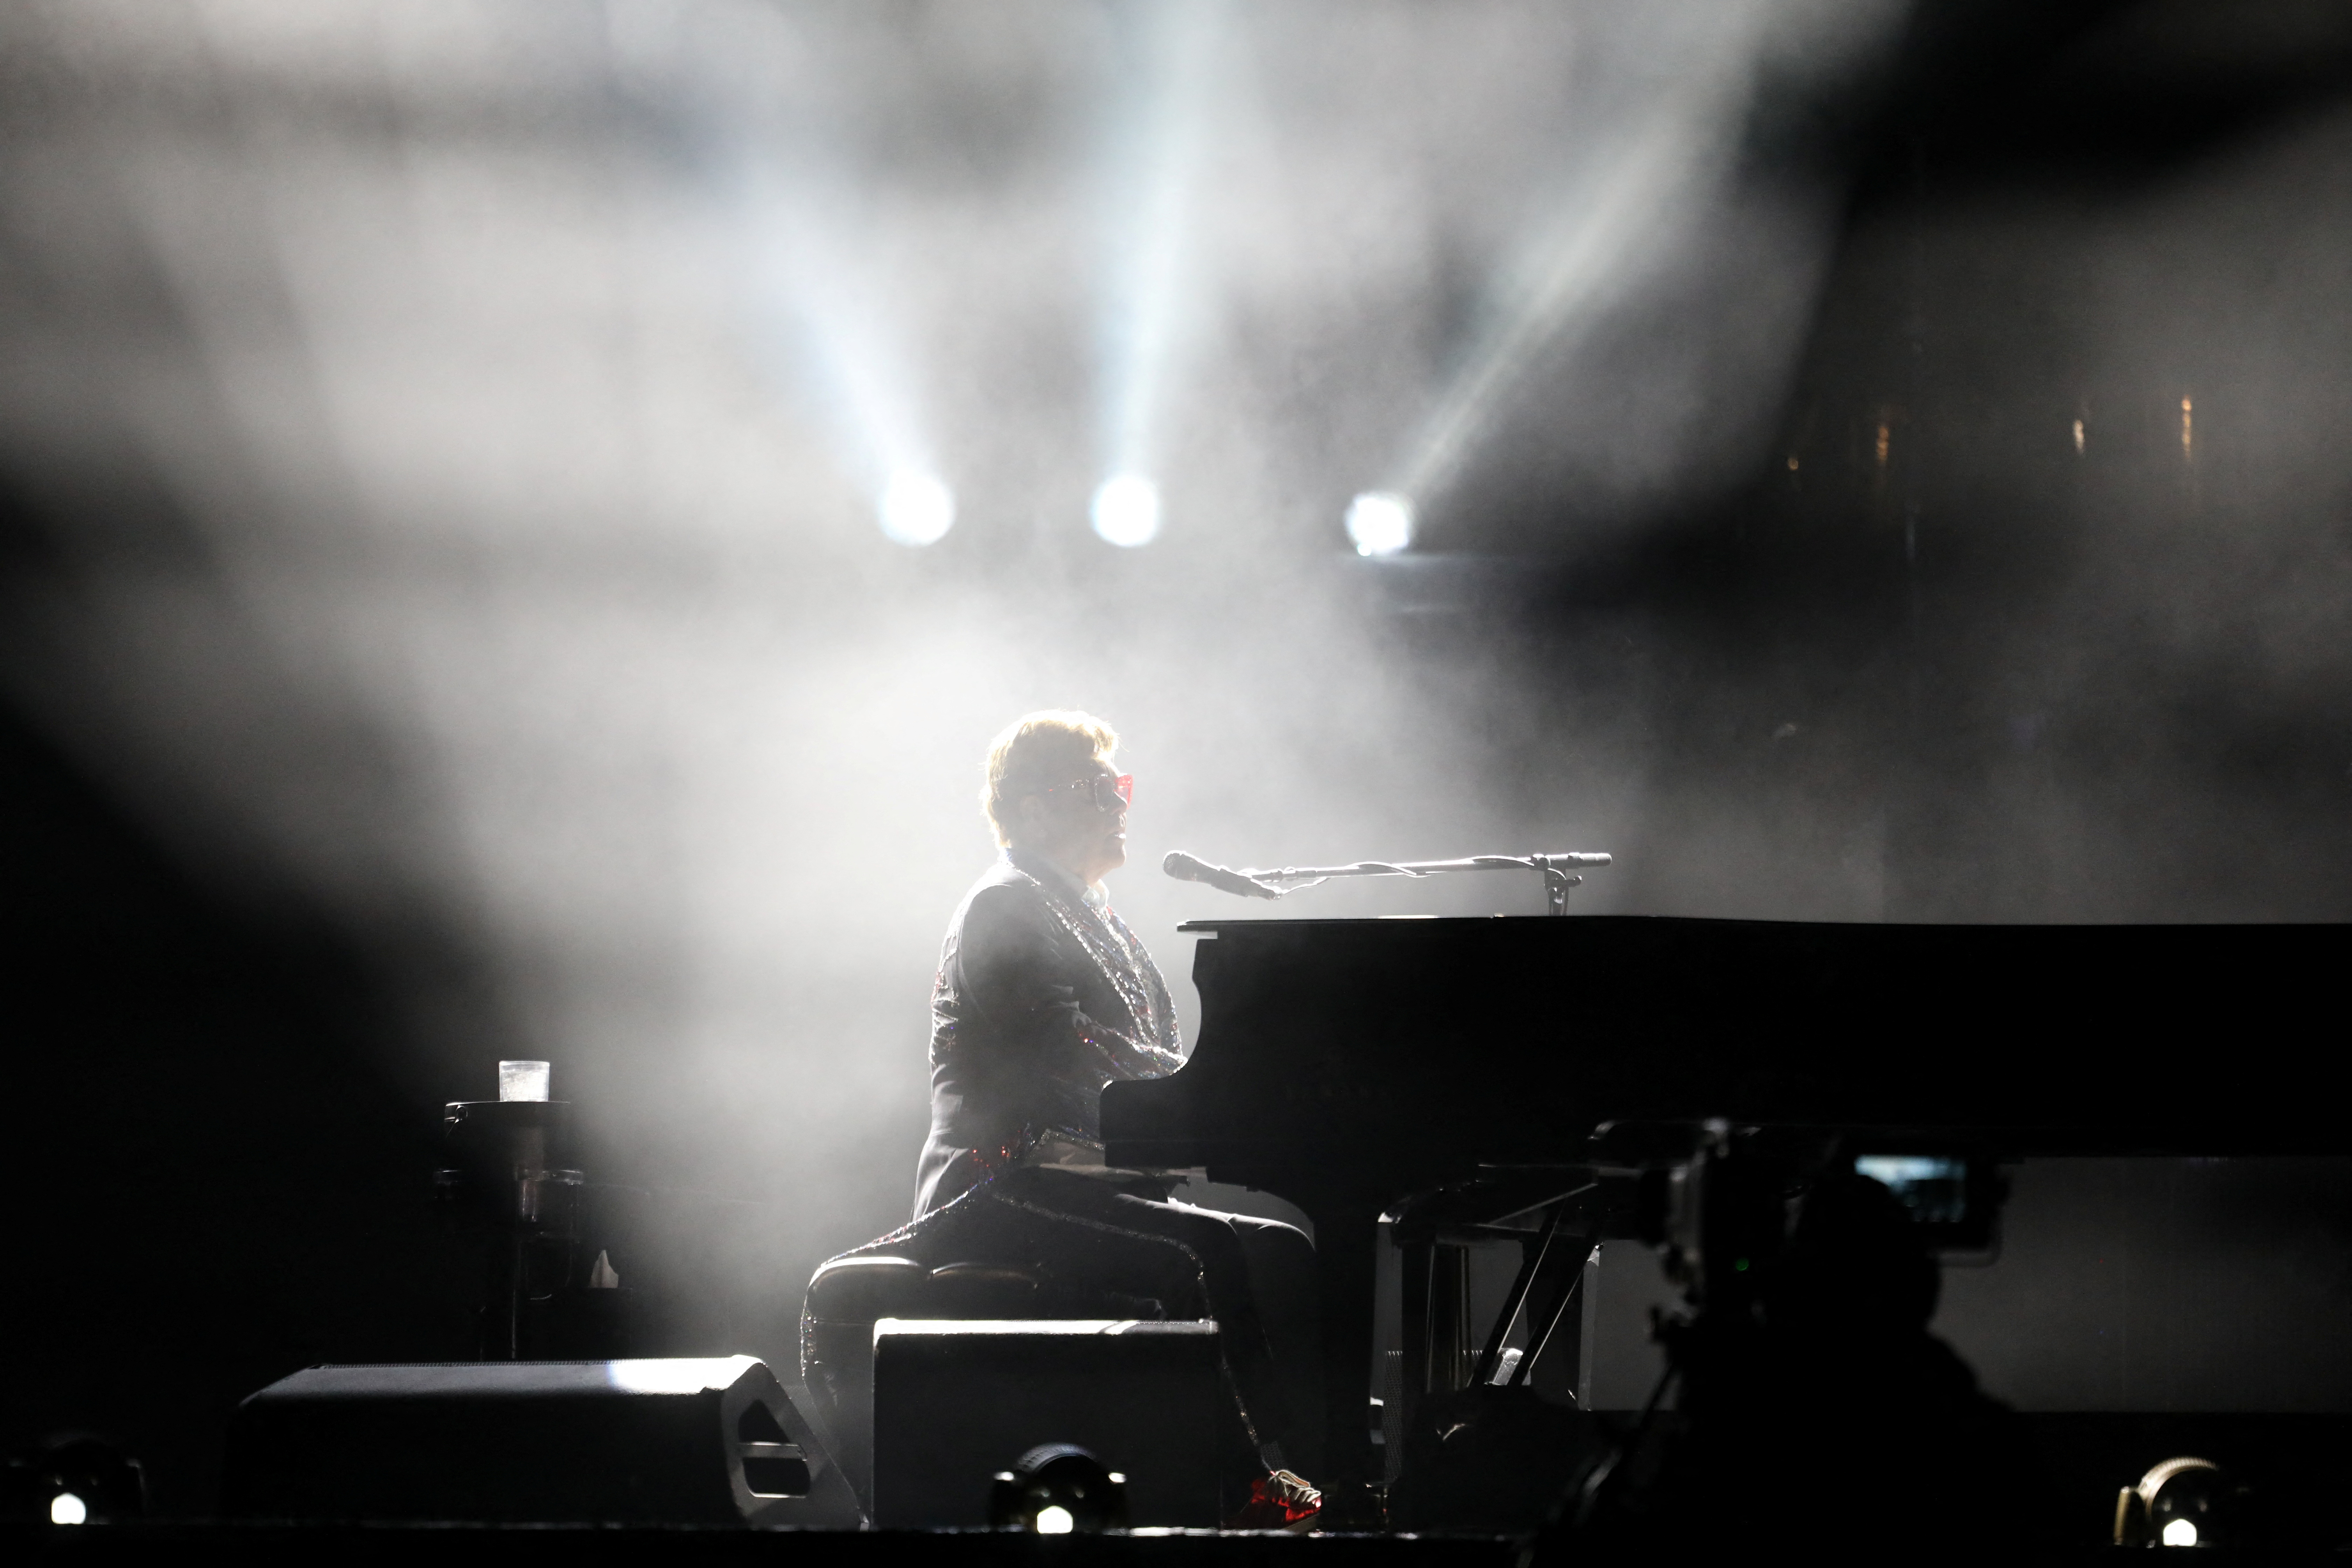 Elton John ends US leg of farewell tour with starry Dodger Stadium show